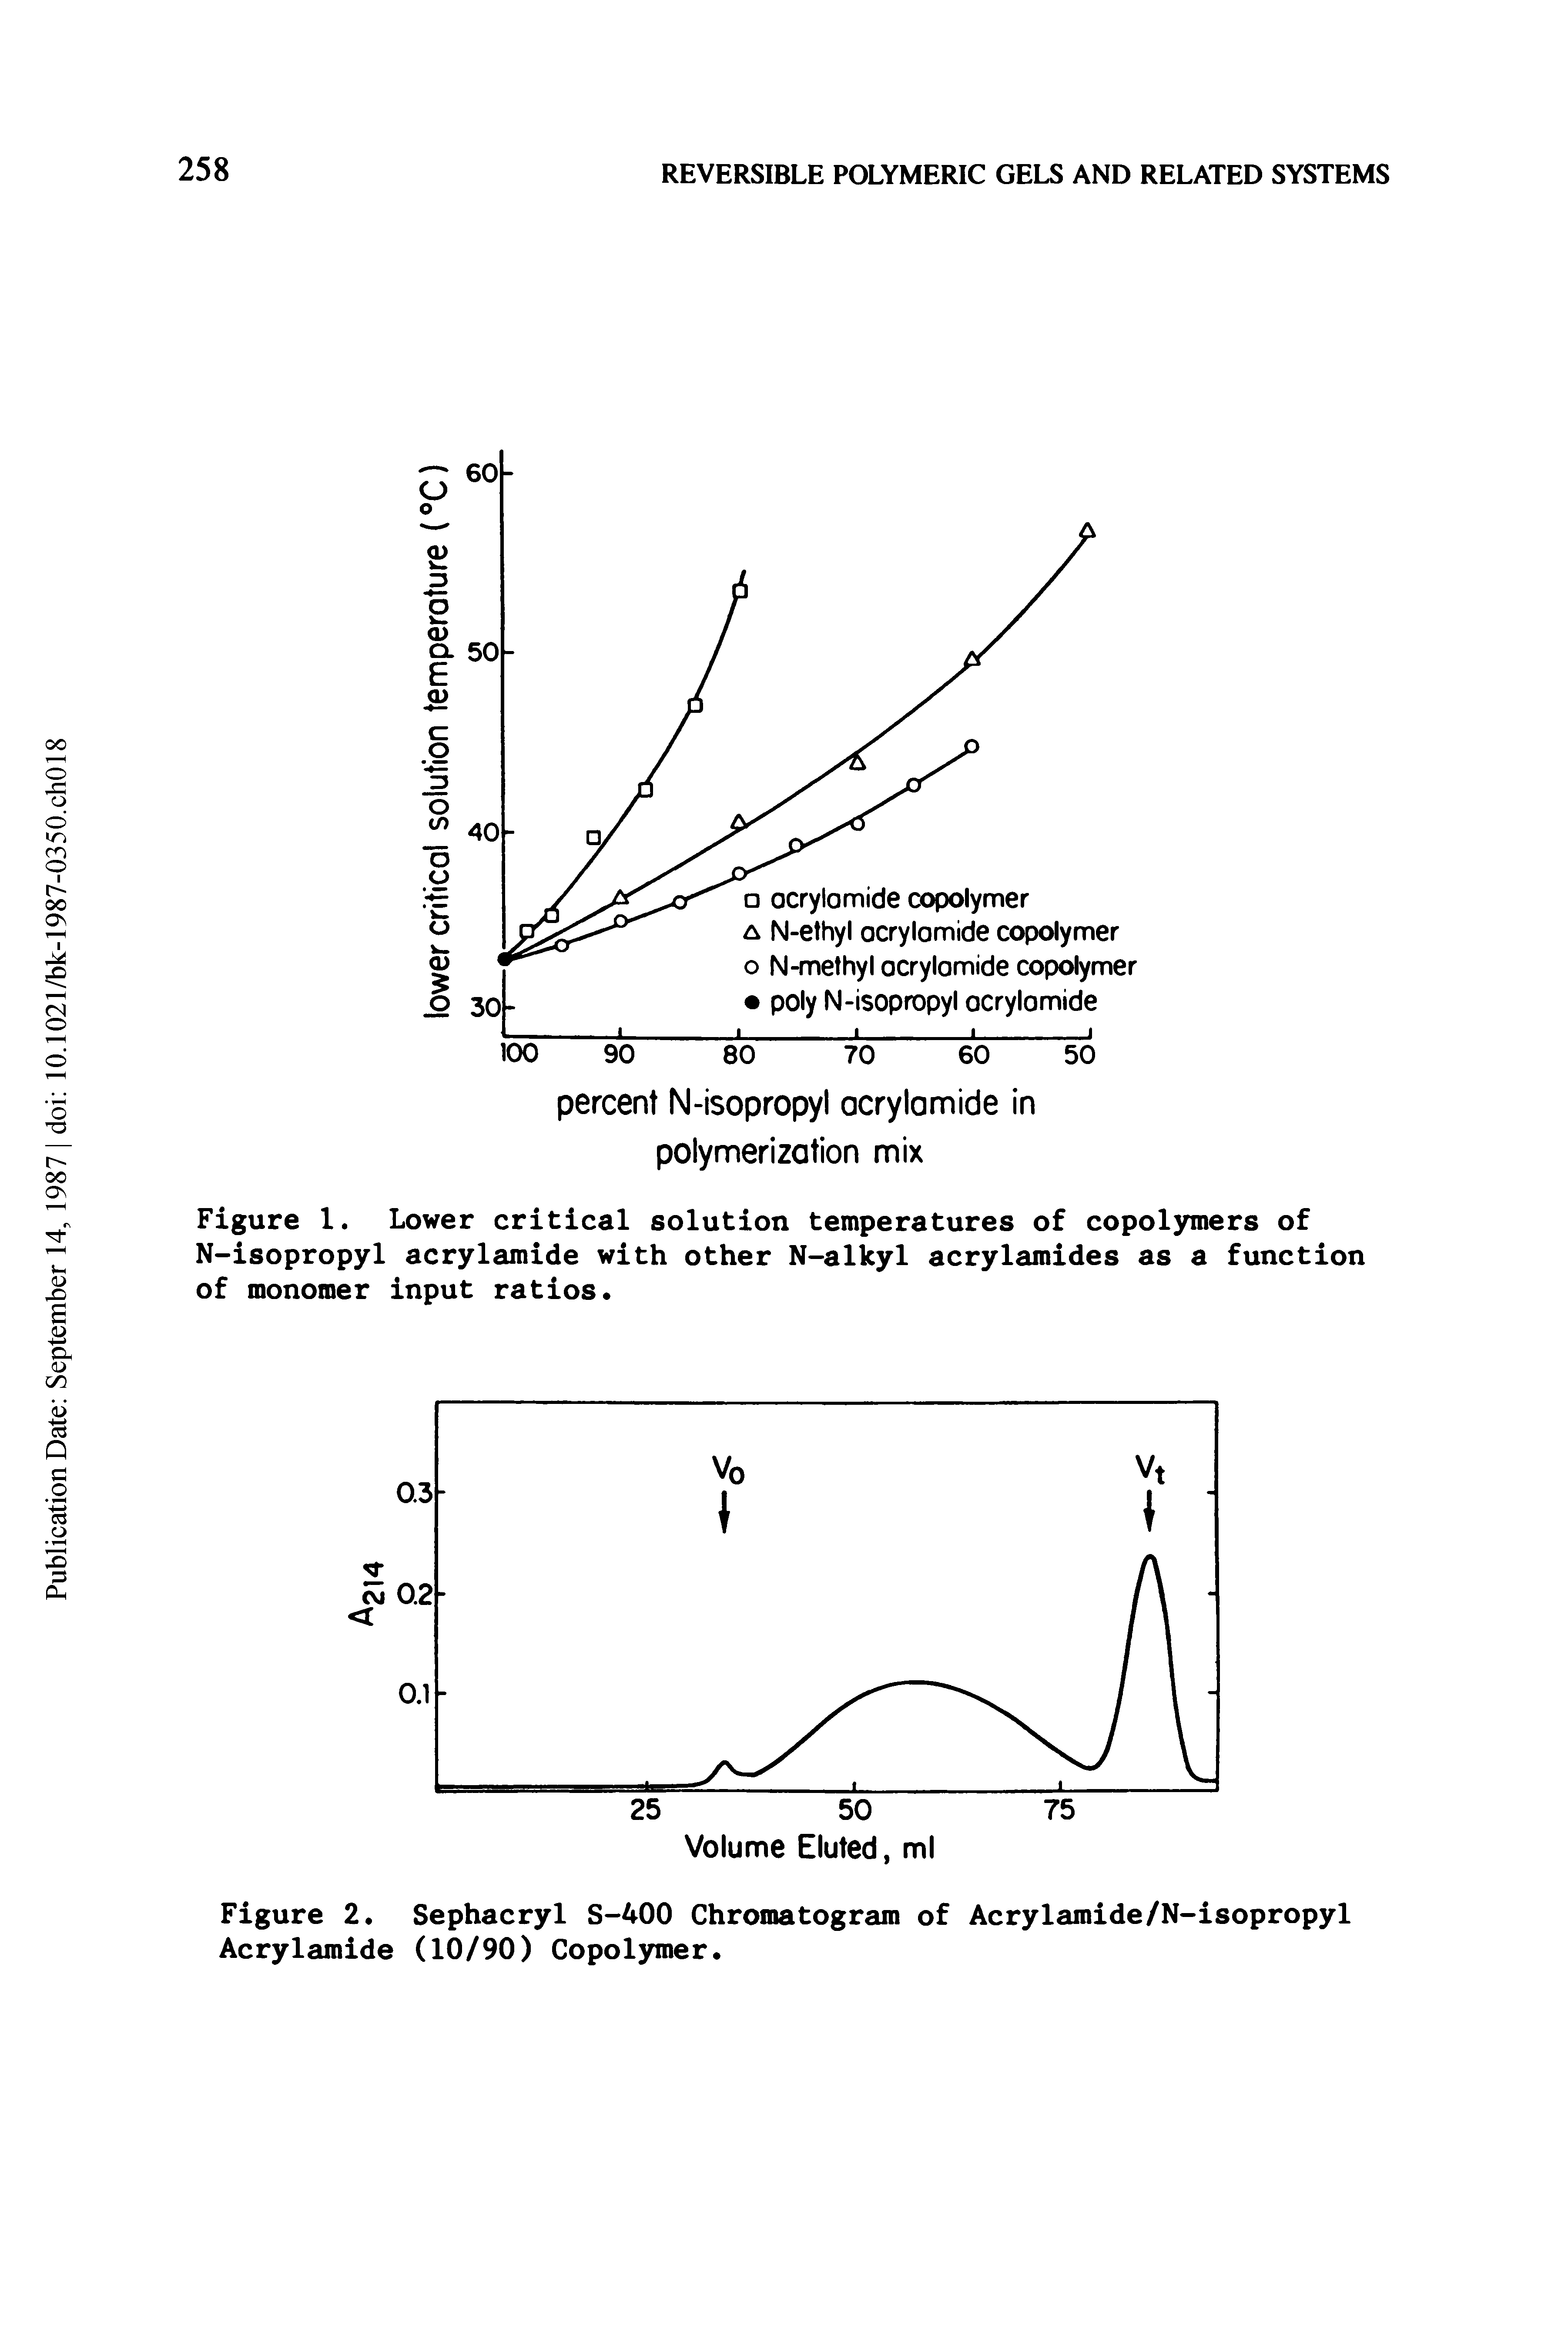 Figure 2. Sephacryl S-400 Chromatogram of Acrylamide/N-isopropyl Acrylamide (10/90) Copolymer.